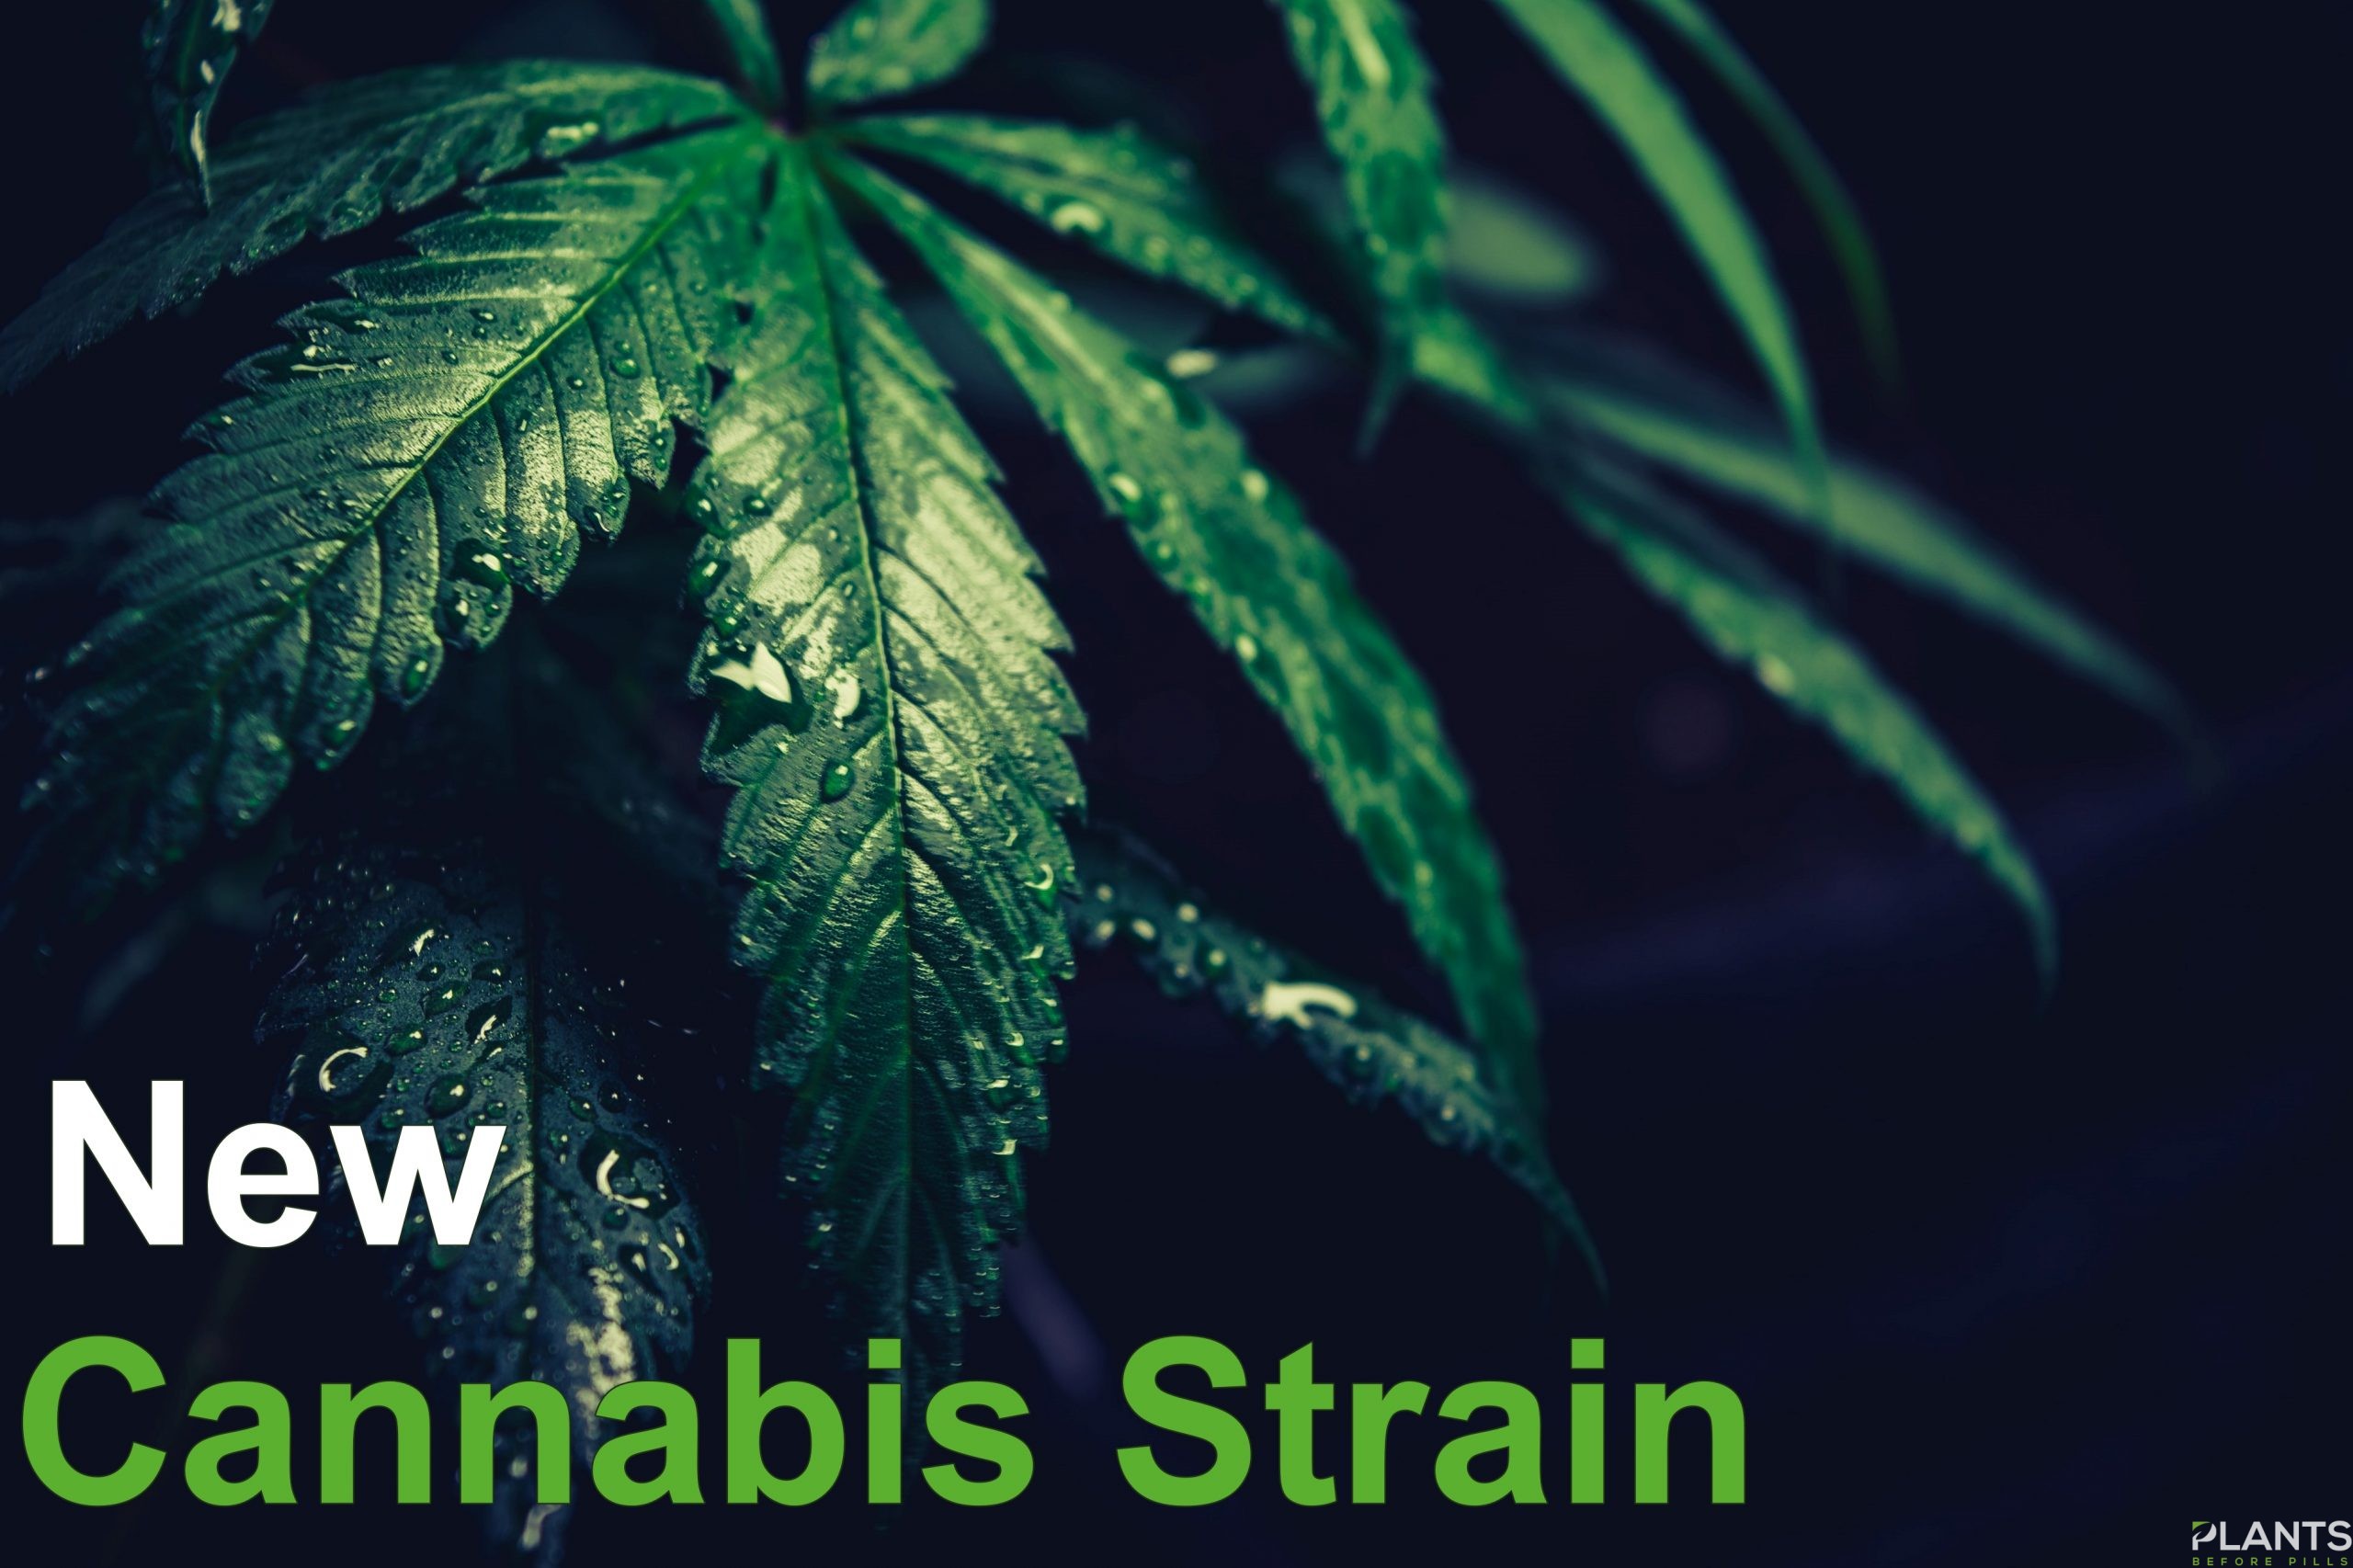 New Cannabis Strain, Leo Bridgewater and Harmony Dispensary